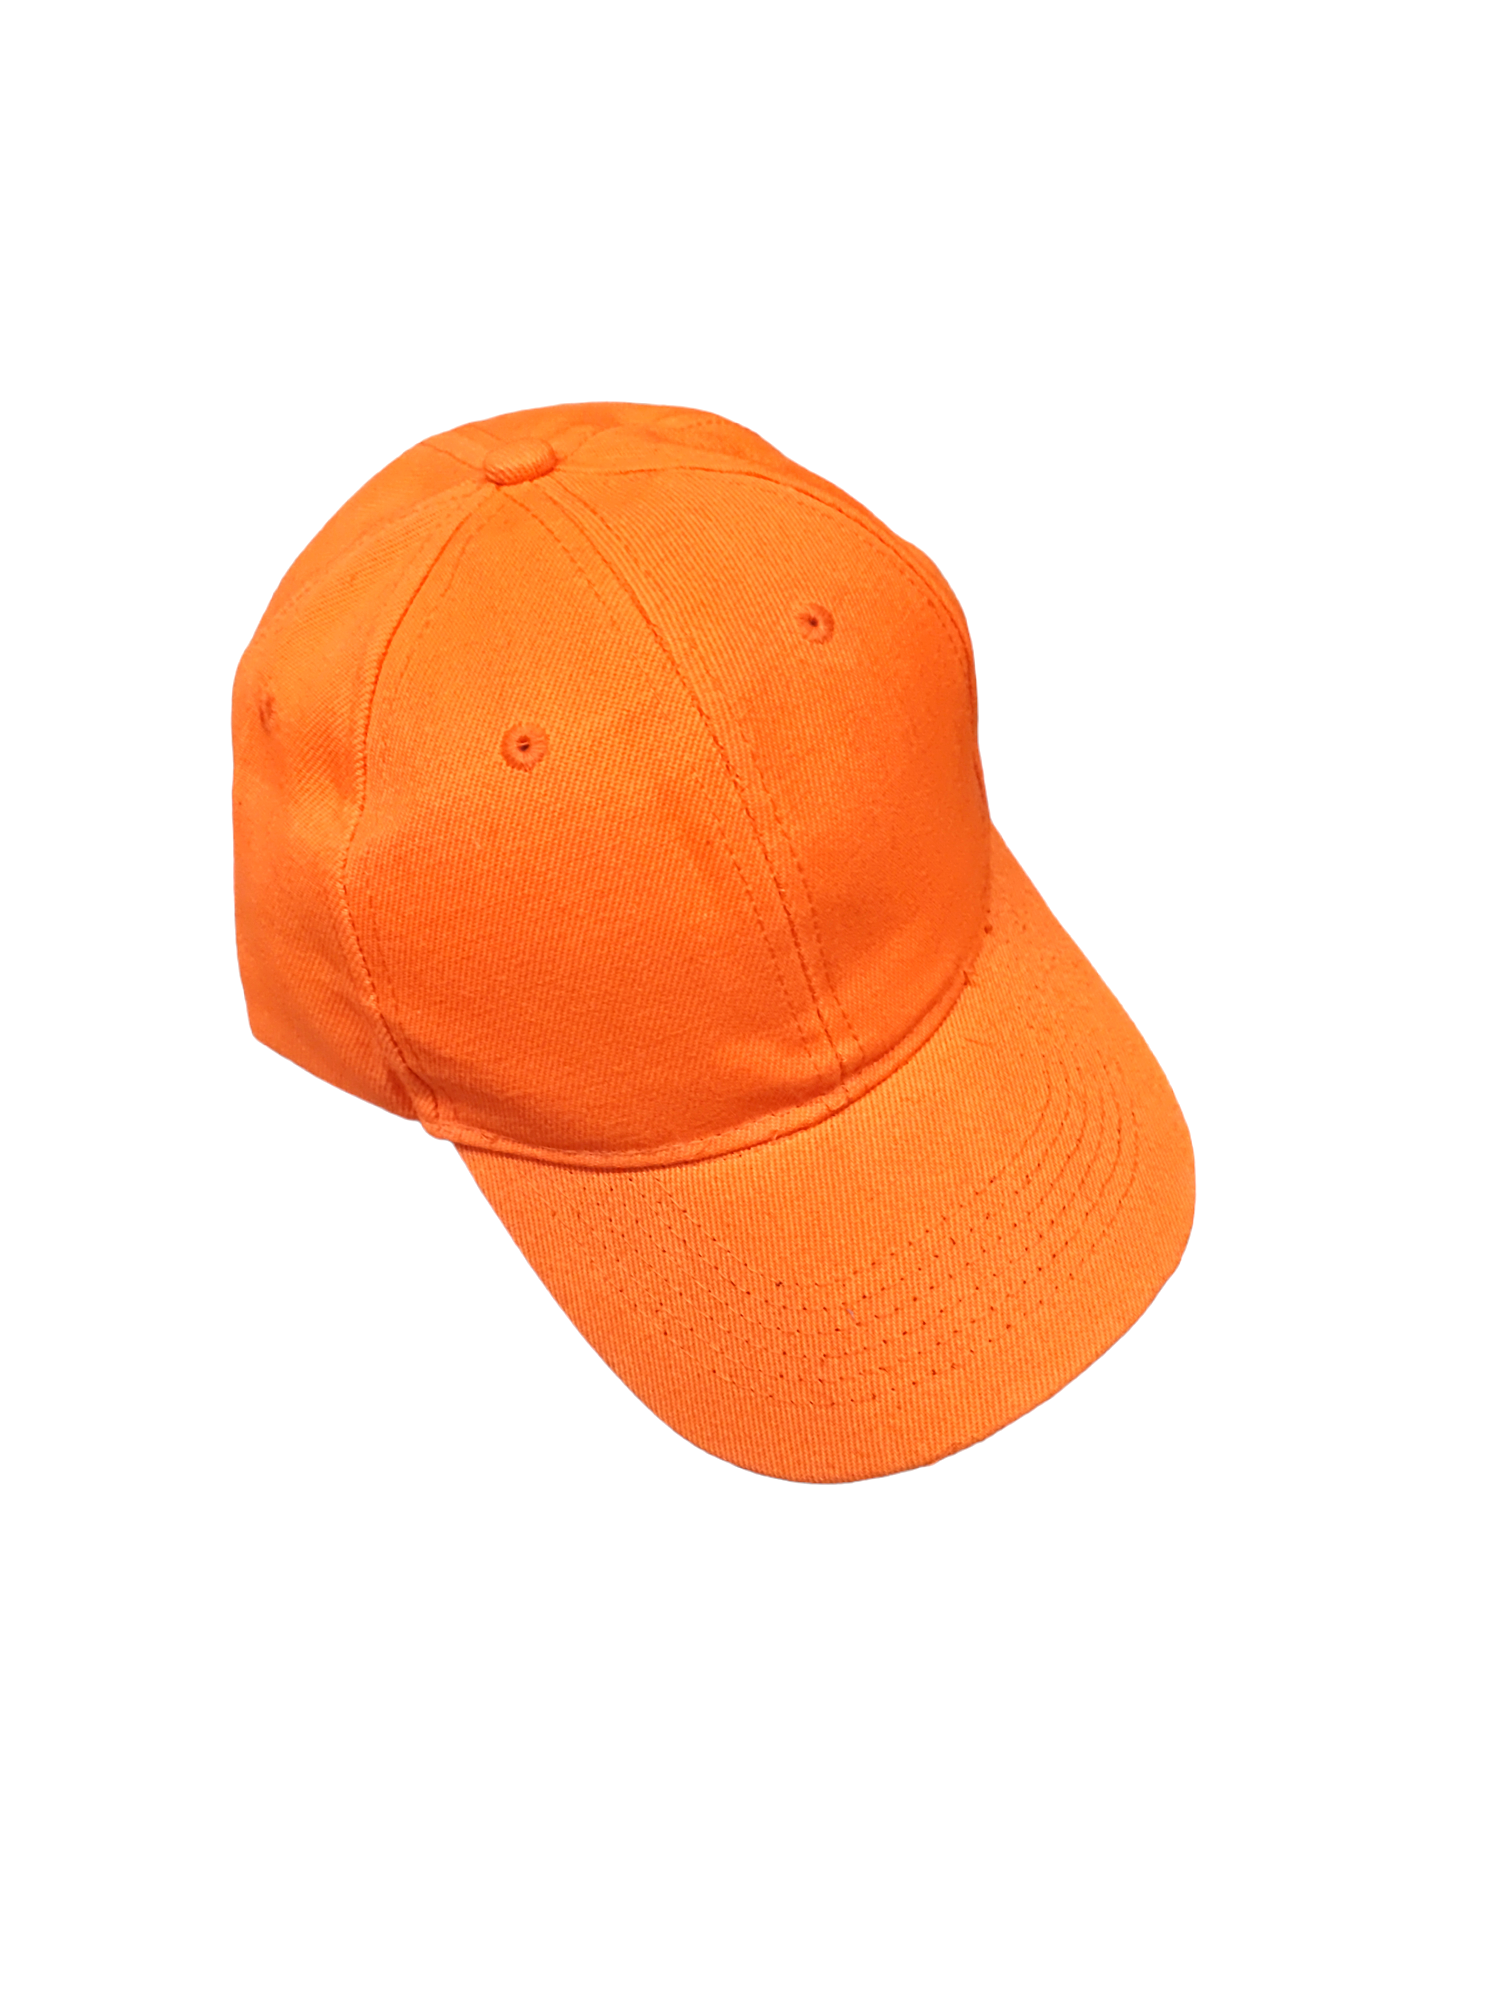 Casquette couleur unie orange fluo (x12)#17